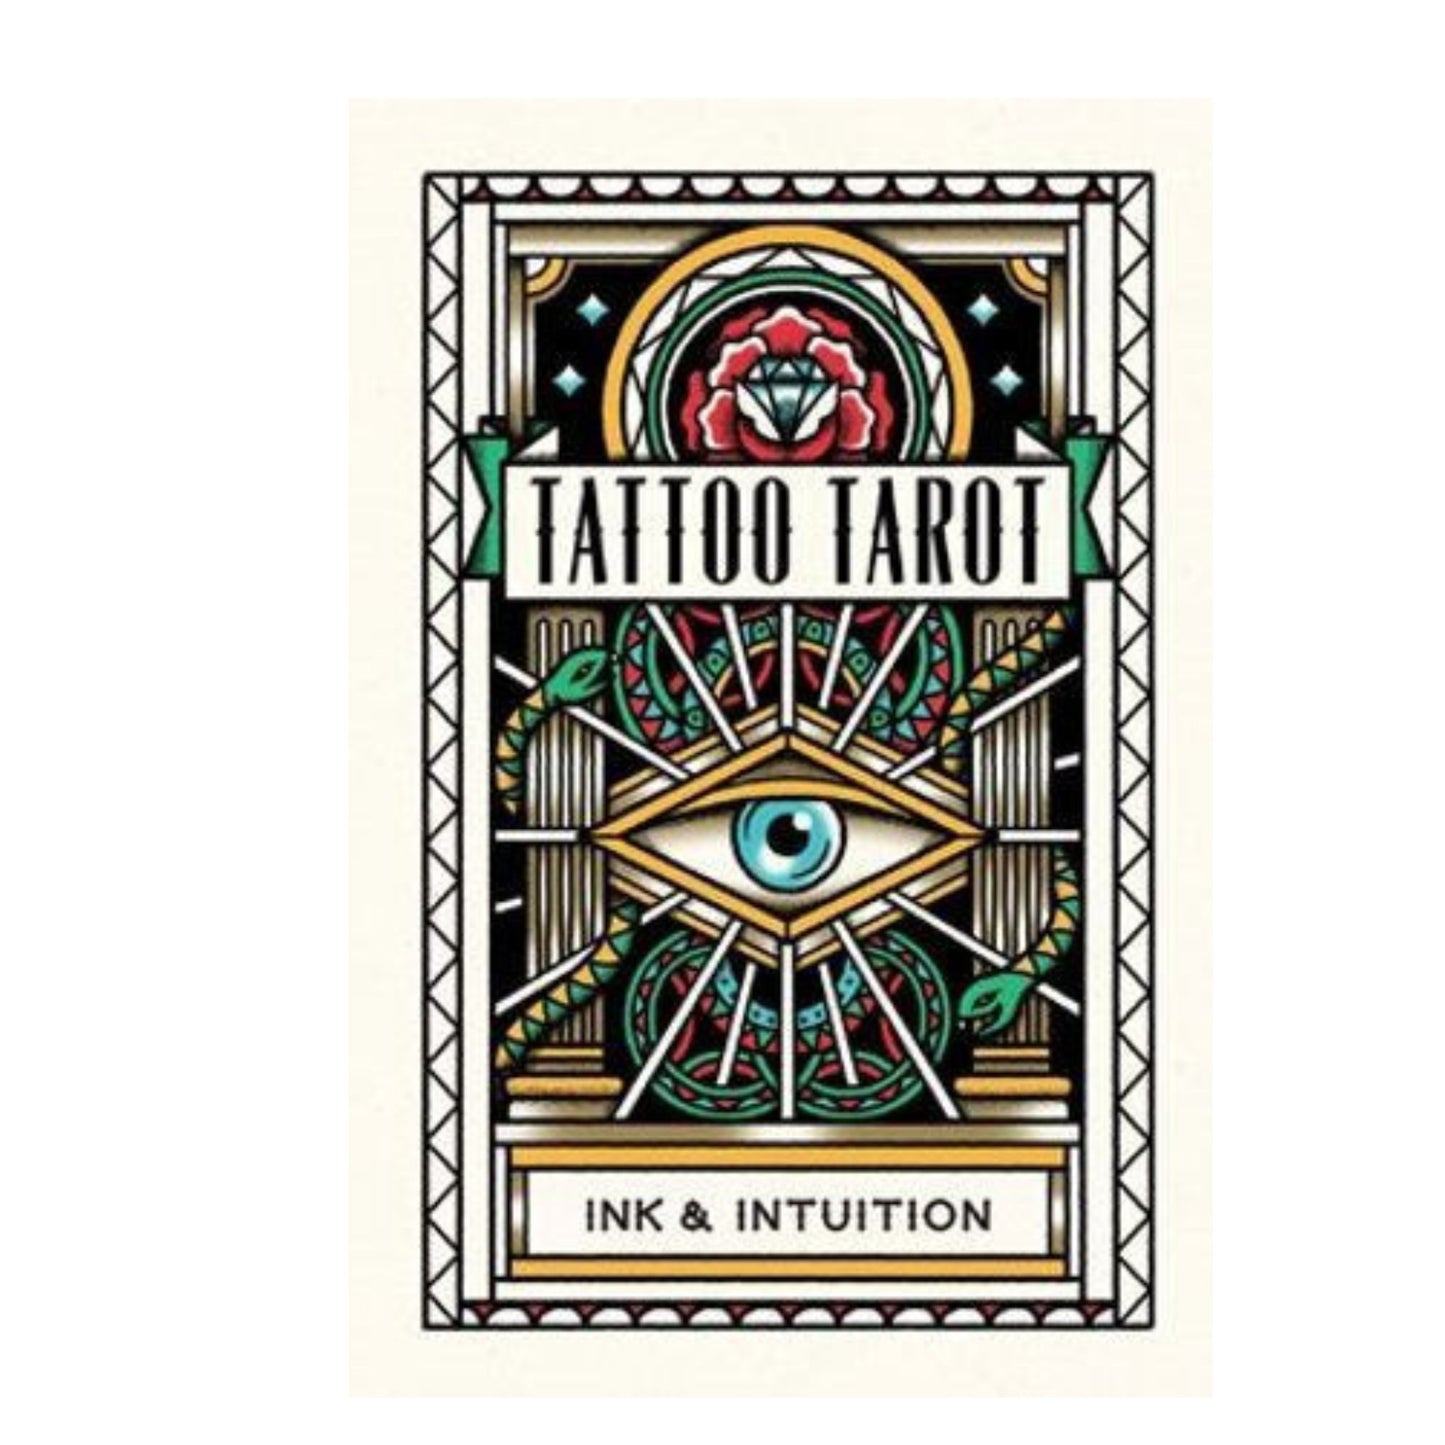 Tattoo Tarot - Ink & Intuition - Mana on Mayne